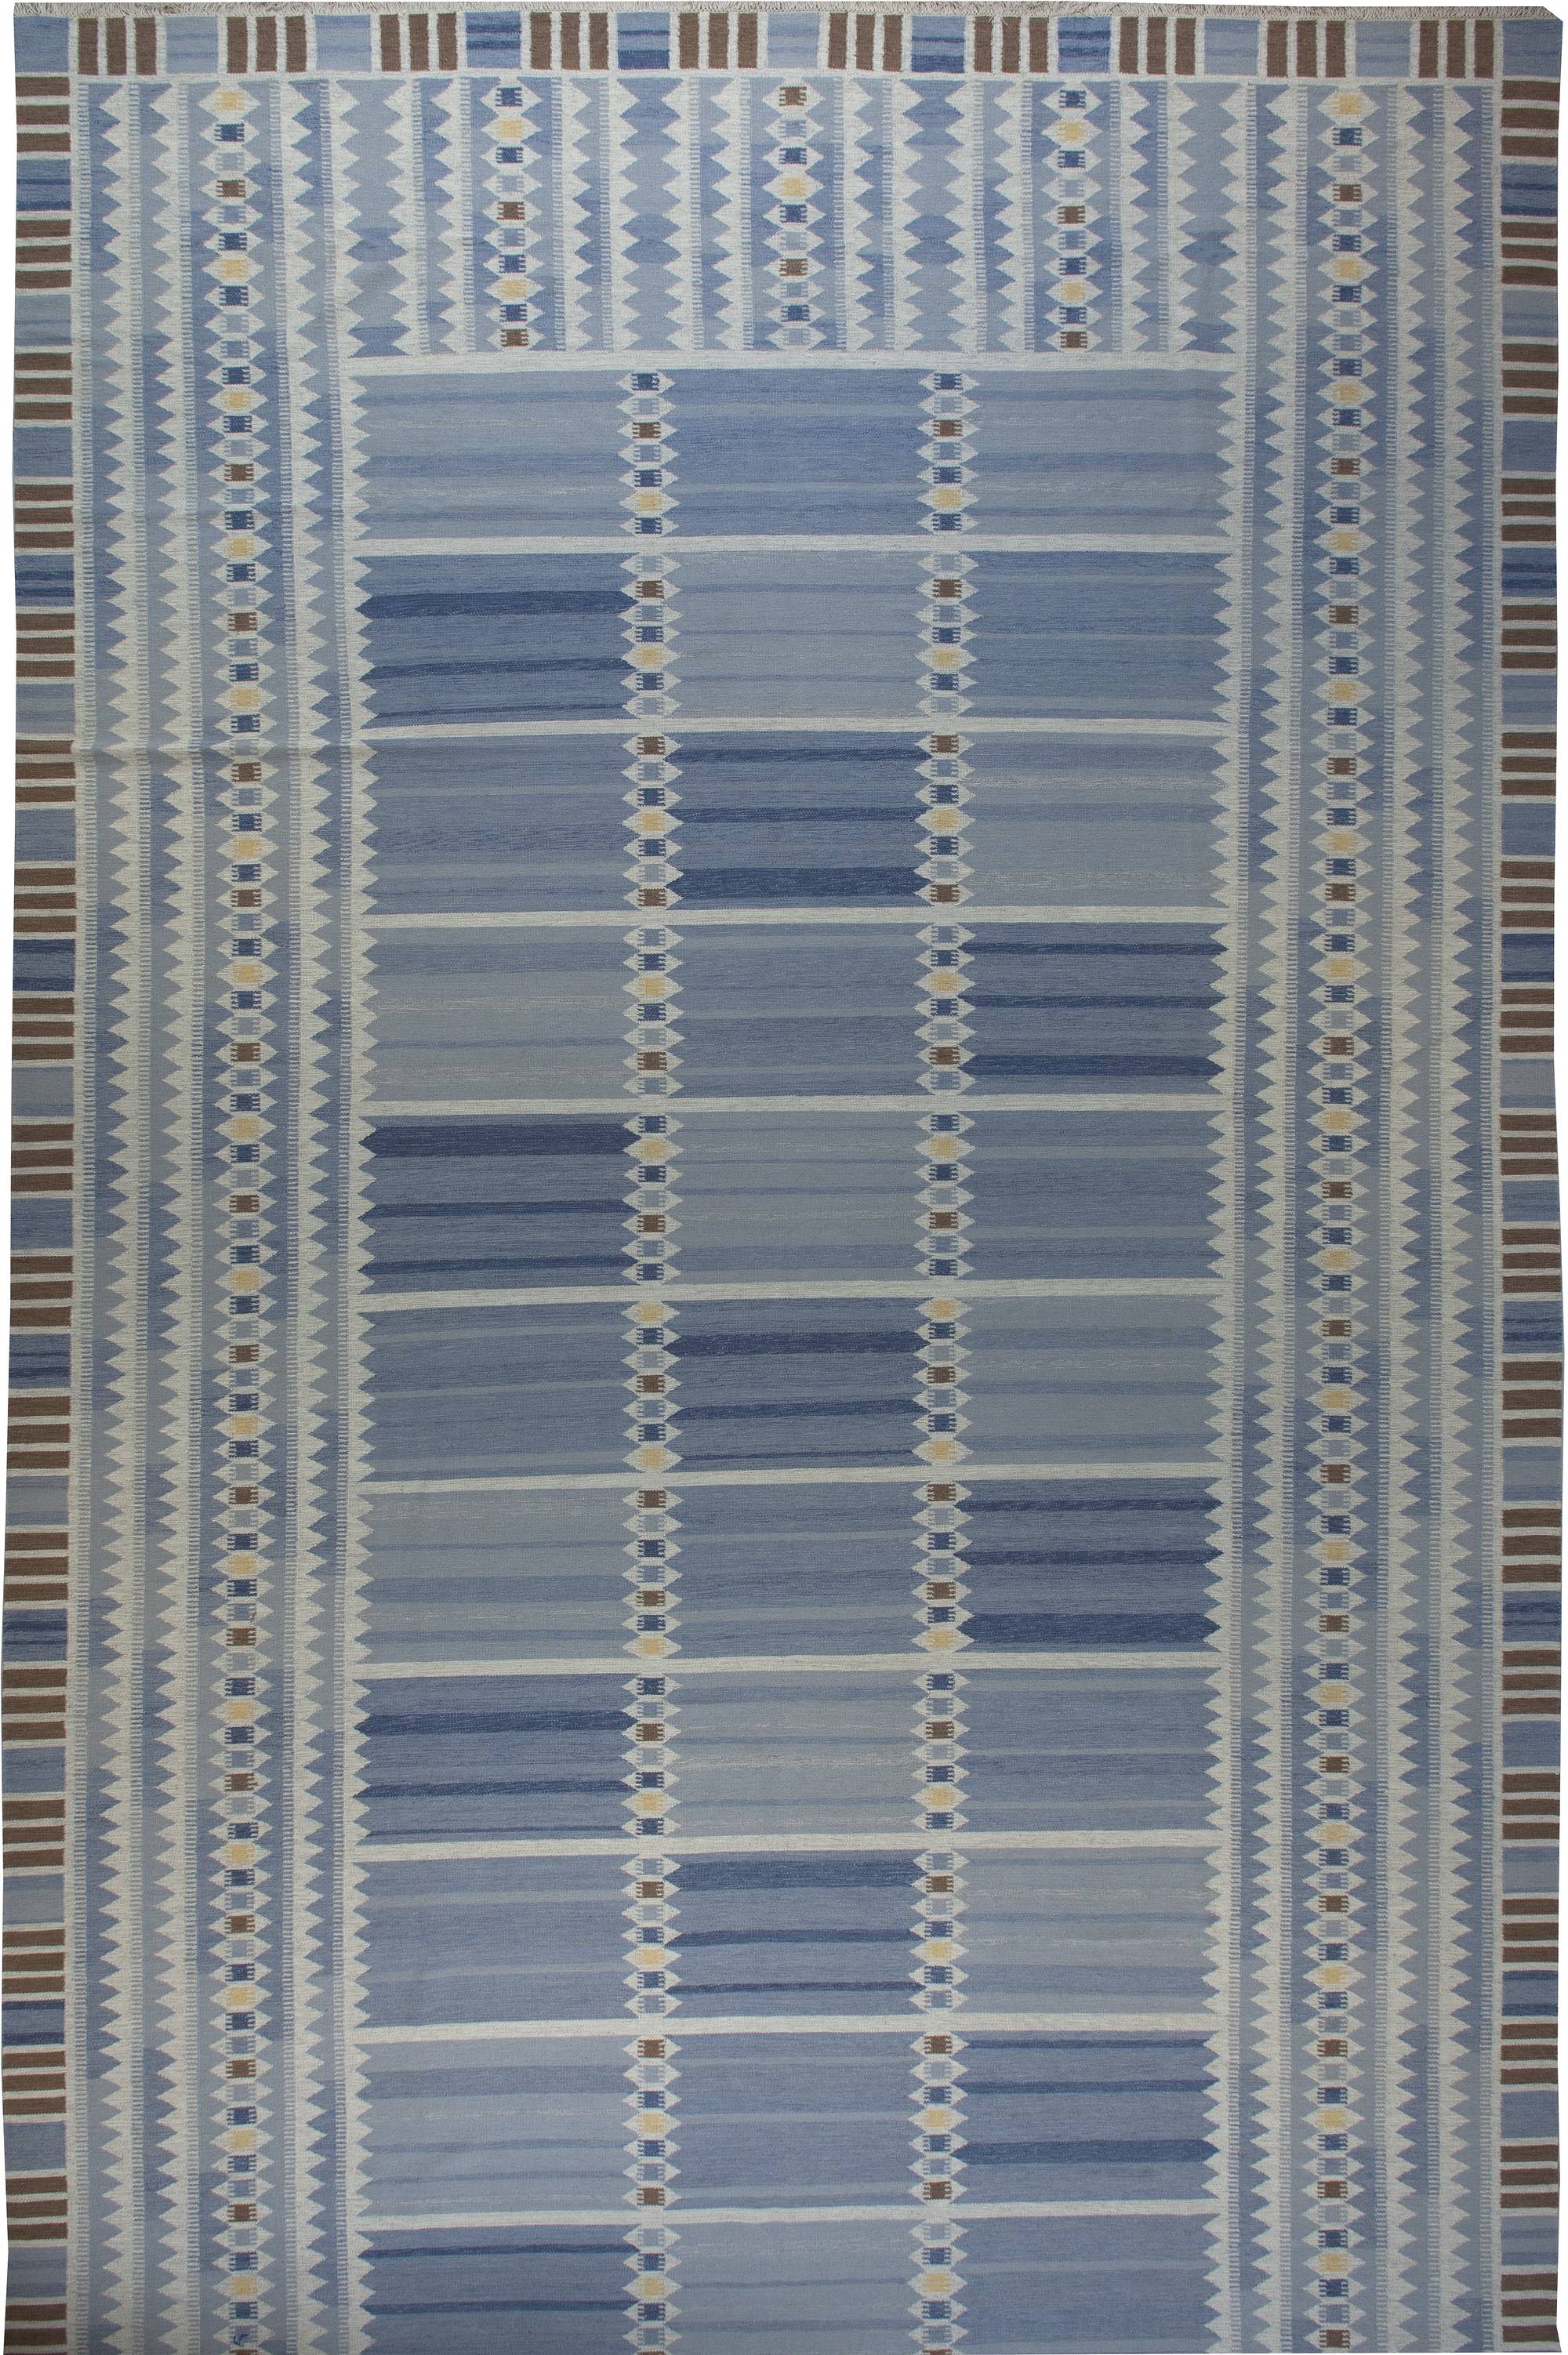 https://www.dorisleslieblau.com/images/oversized-rugs-modern-carpets-swedish-flat-modern-wool-30x15-n11234.jpg